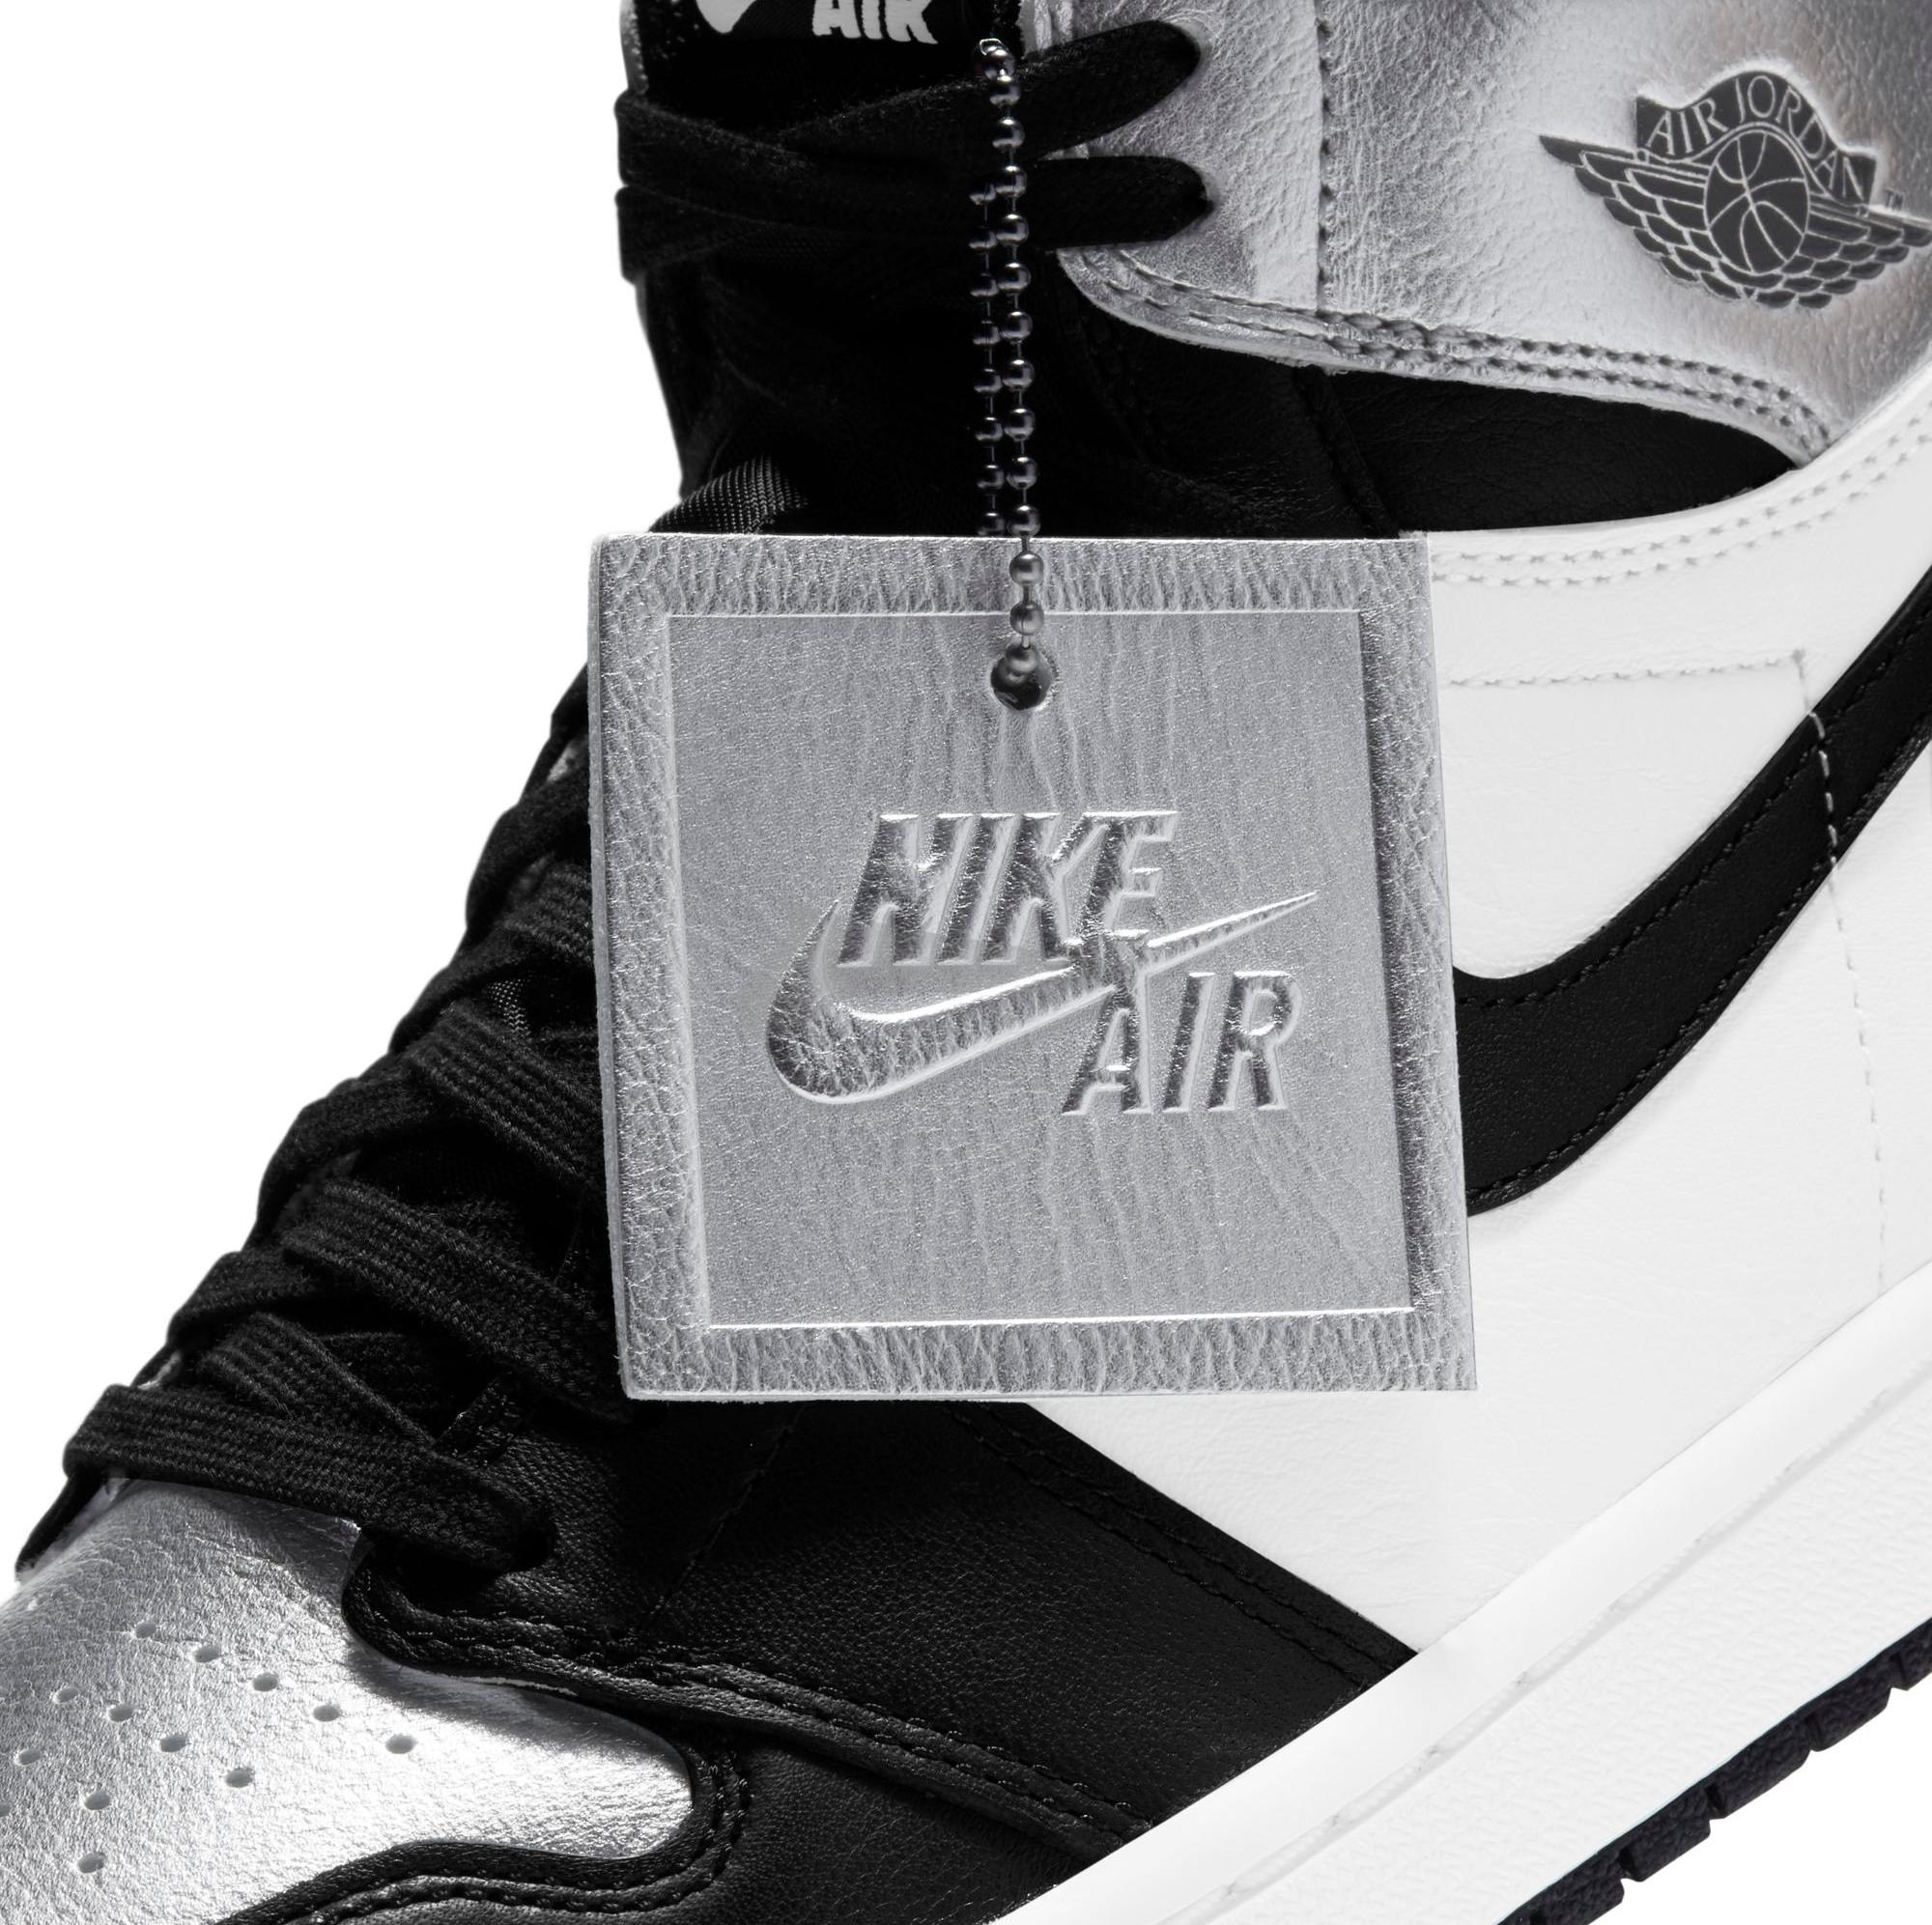 Sneakers Release – Women's and Kids' Jordan 1 High OG “Silver Toe”